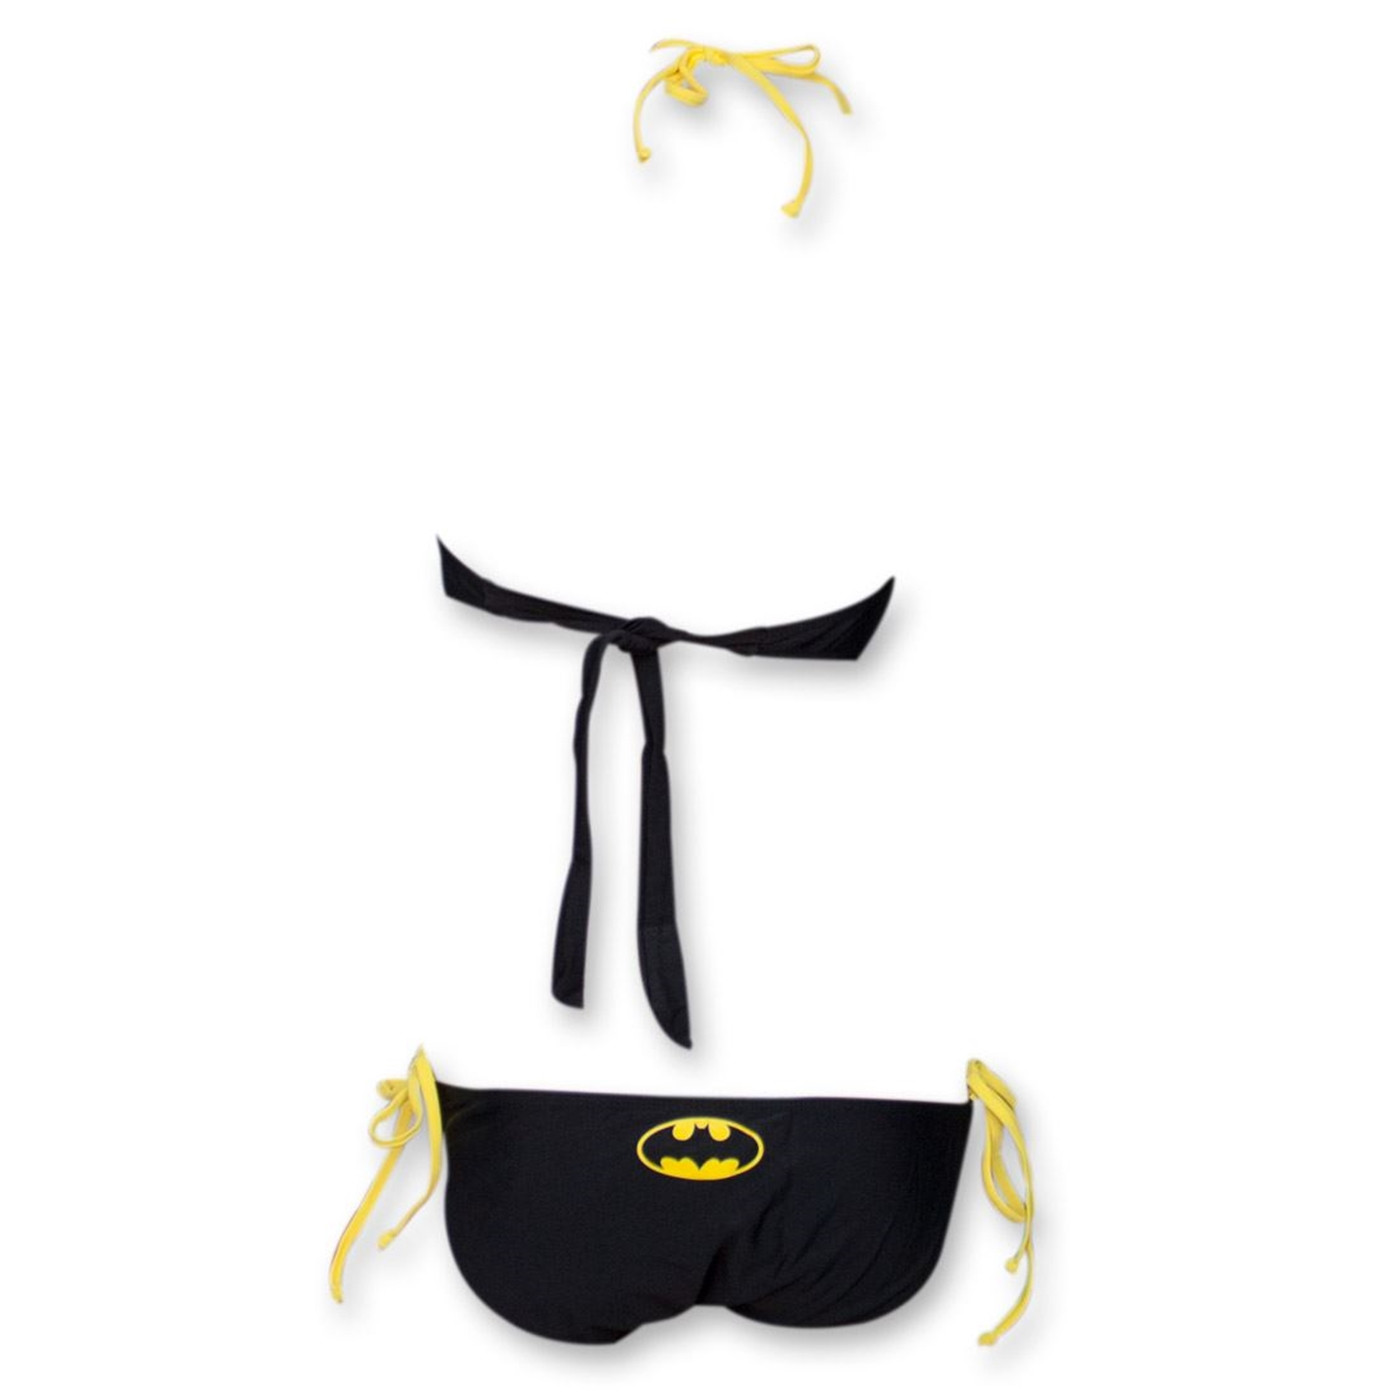 Batman Symbol Monokini Swimsuit